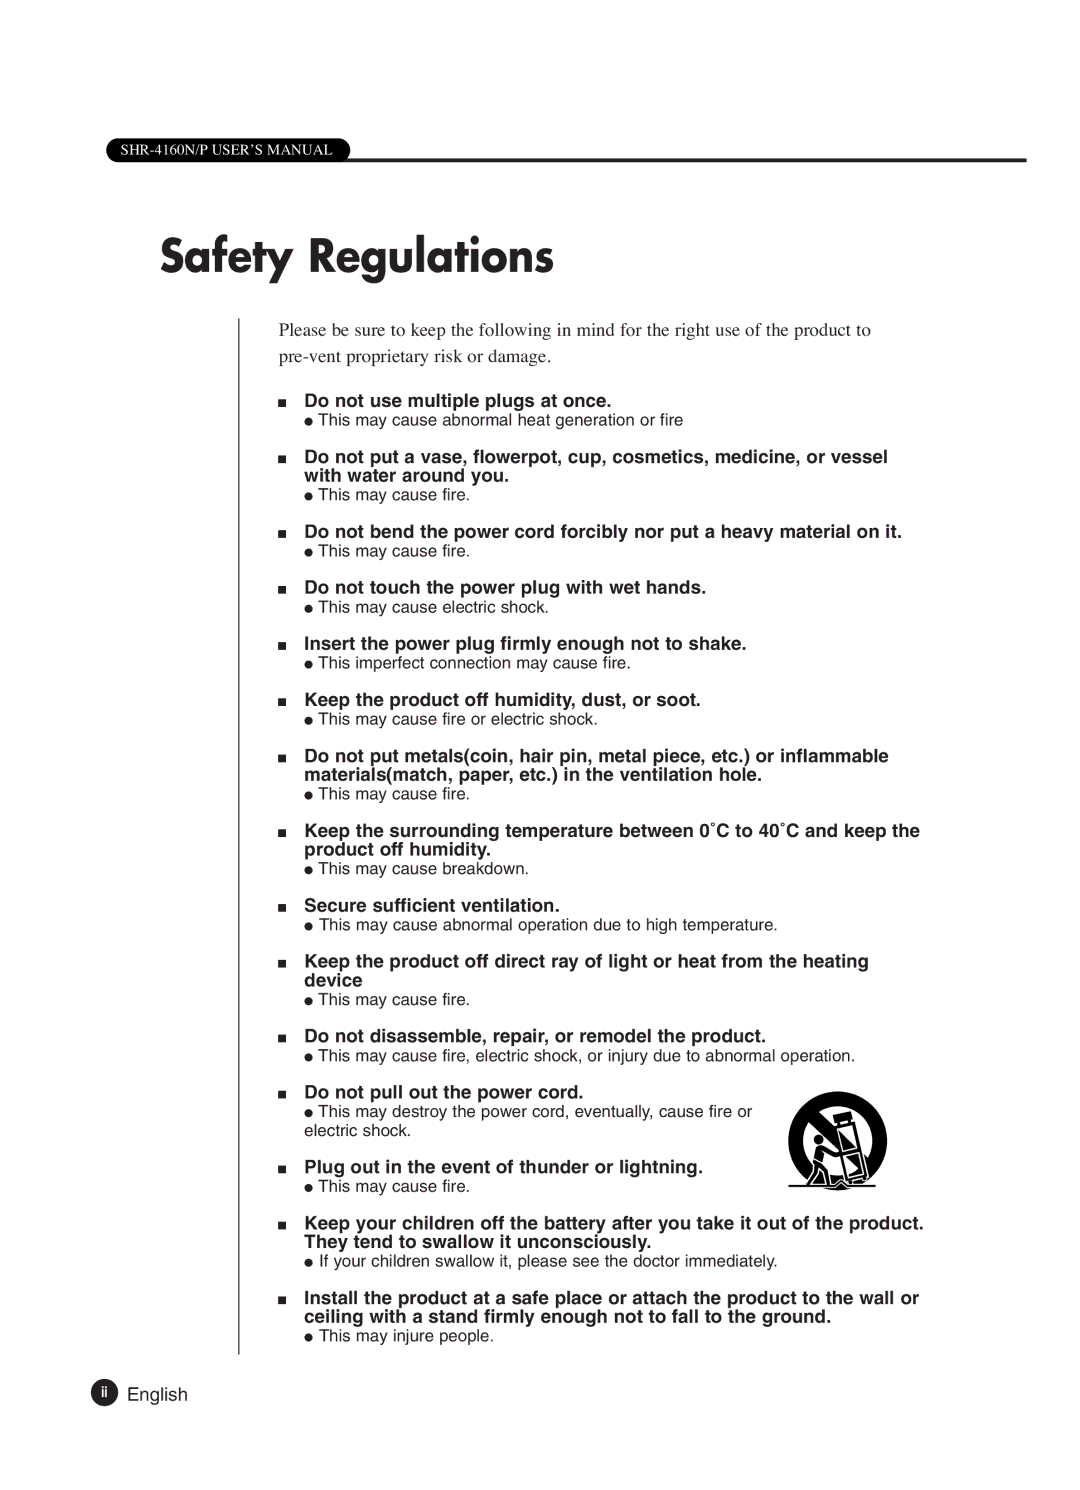 Samsung SHR-4160P manual Safety Regulations, Ii English 